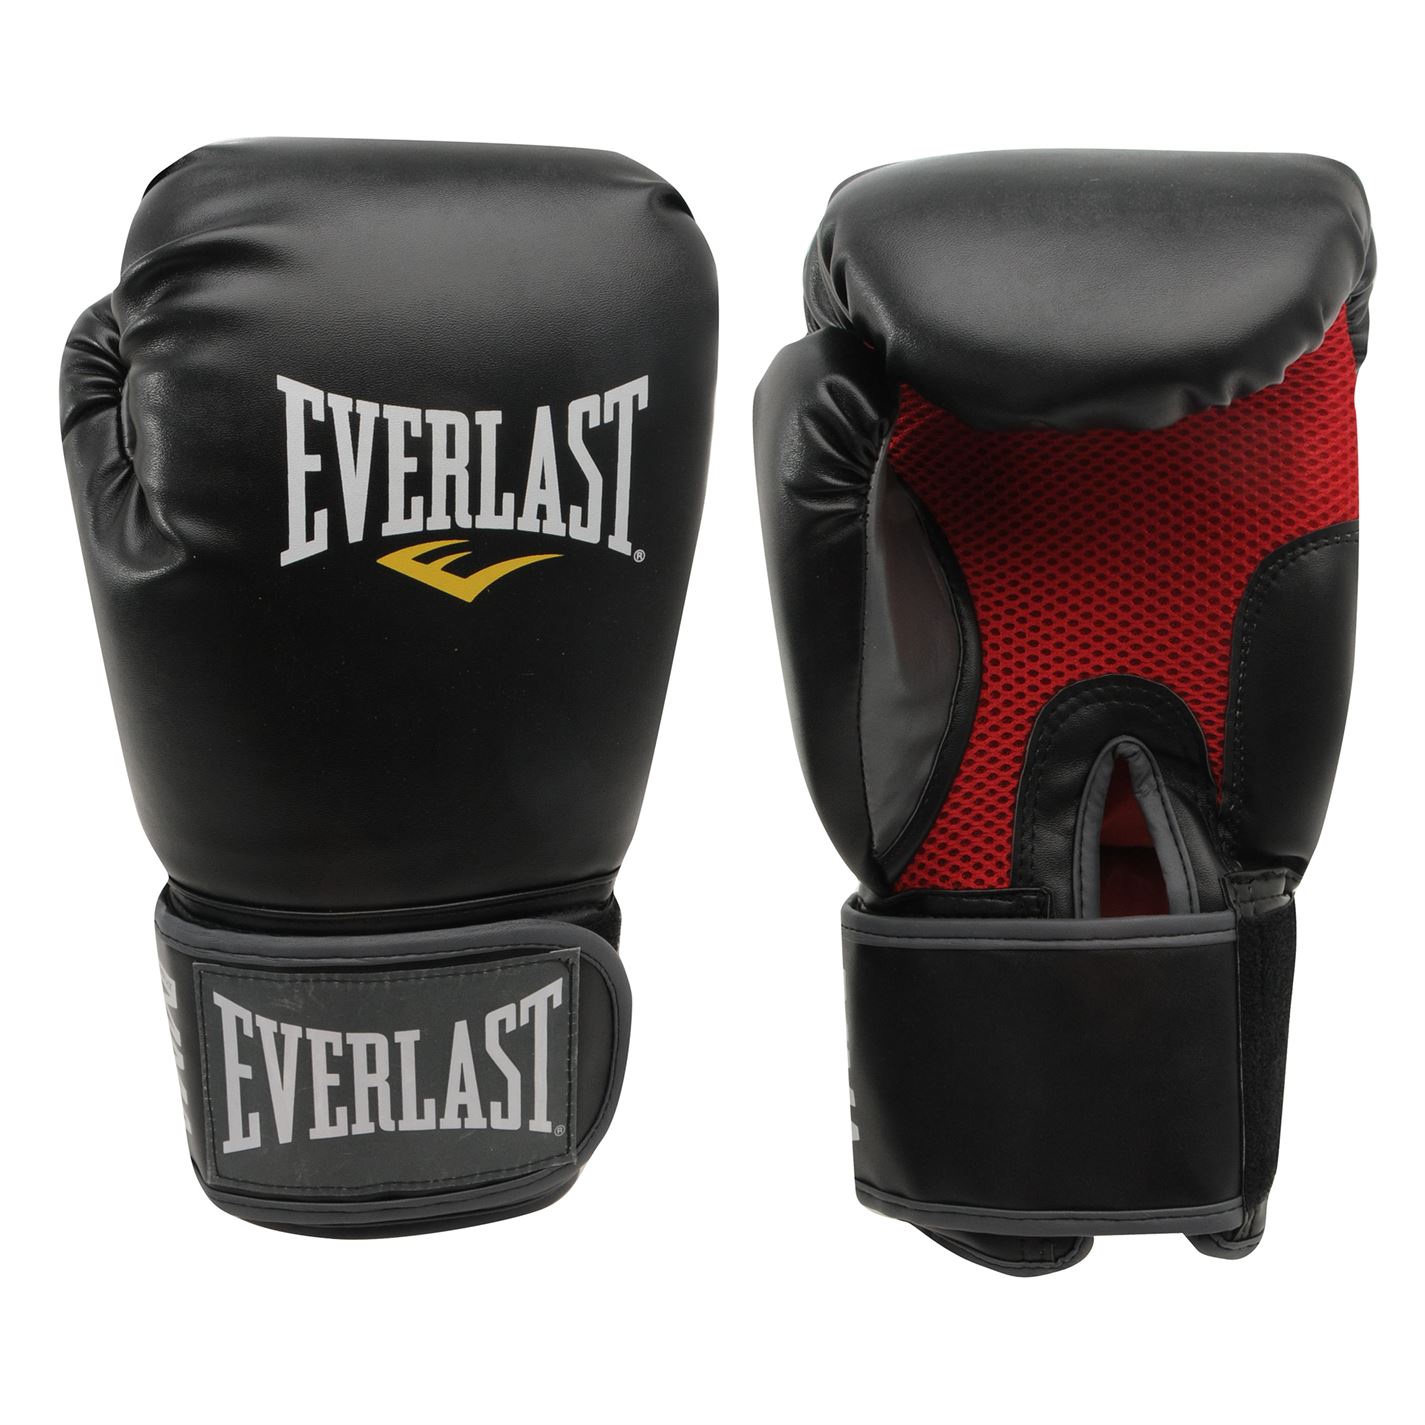 Everlast MMA Muay Thai Gloves1 